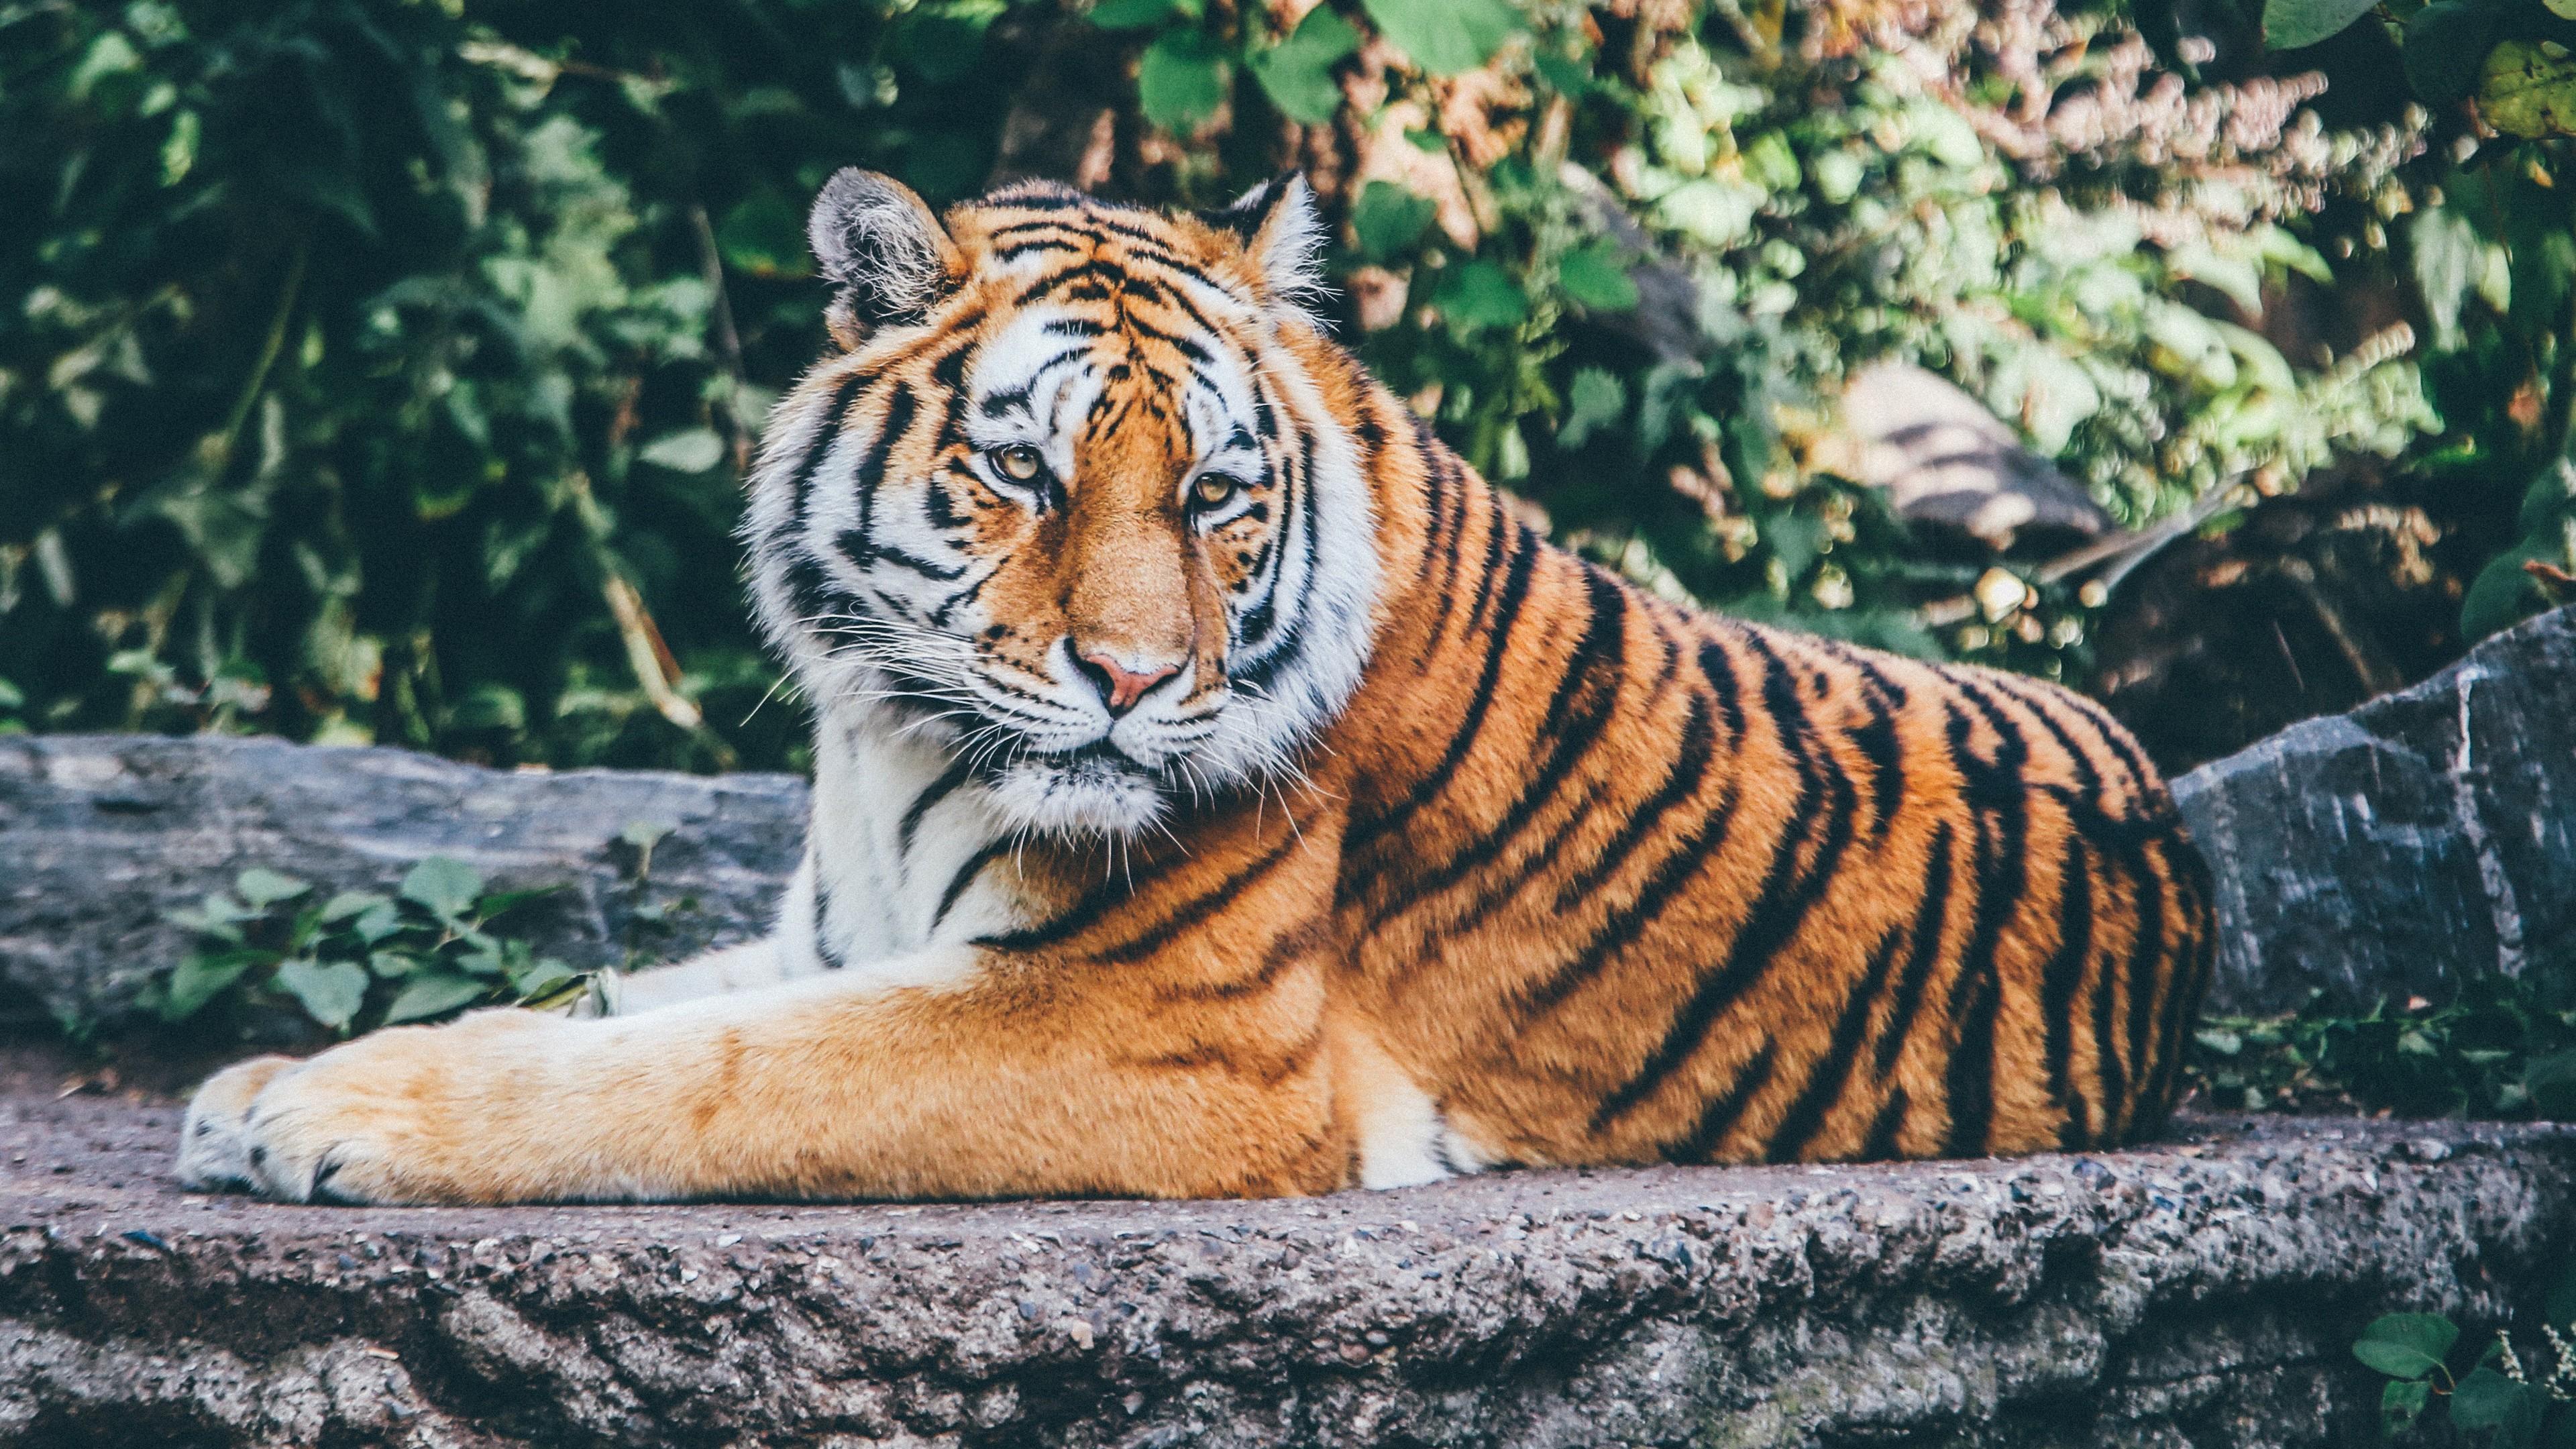 Download Beautiful Zoo Tiger Wallpaper in HD 4K Ultra HD